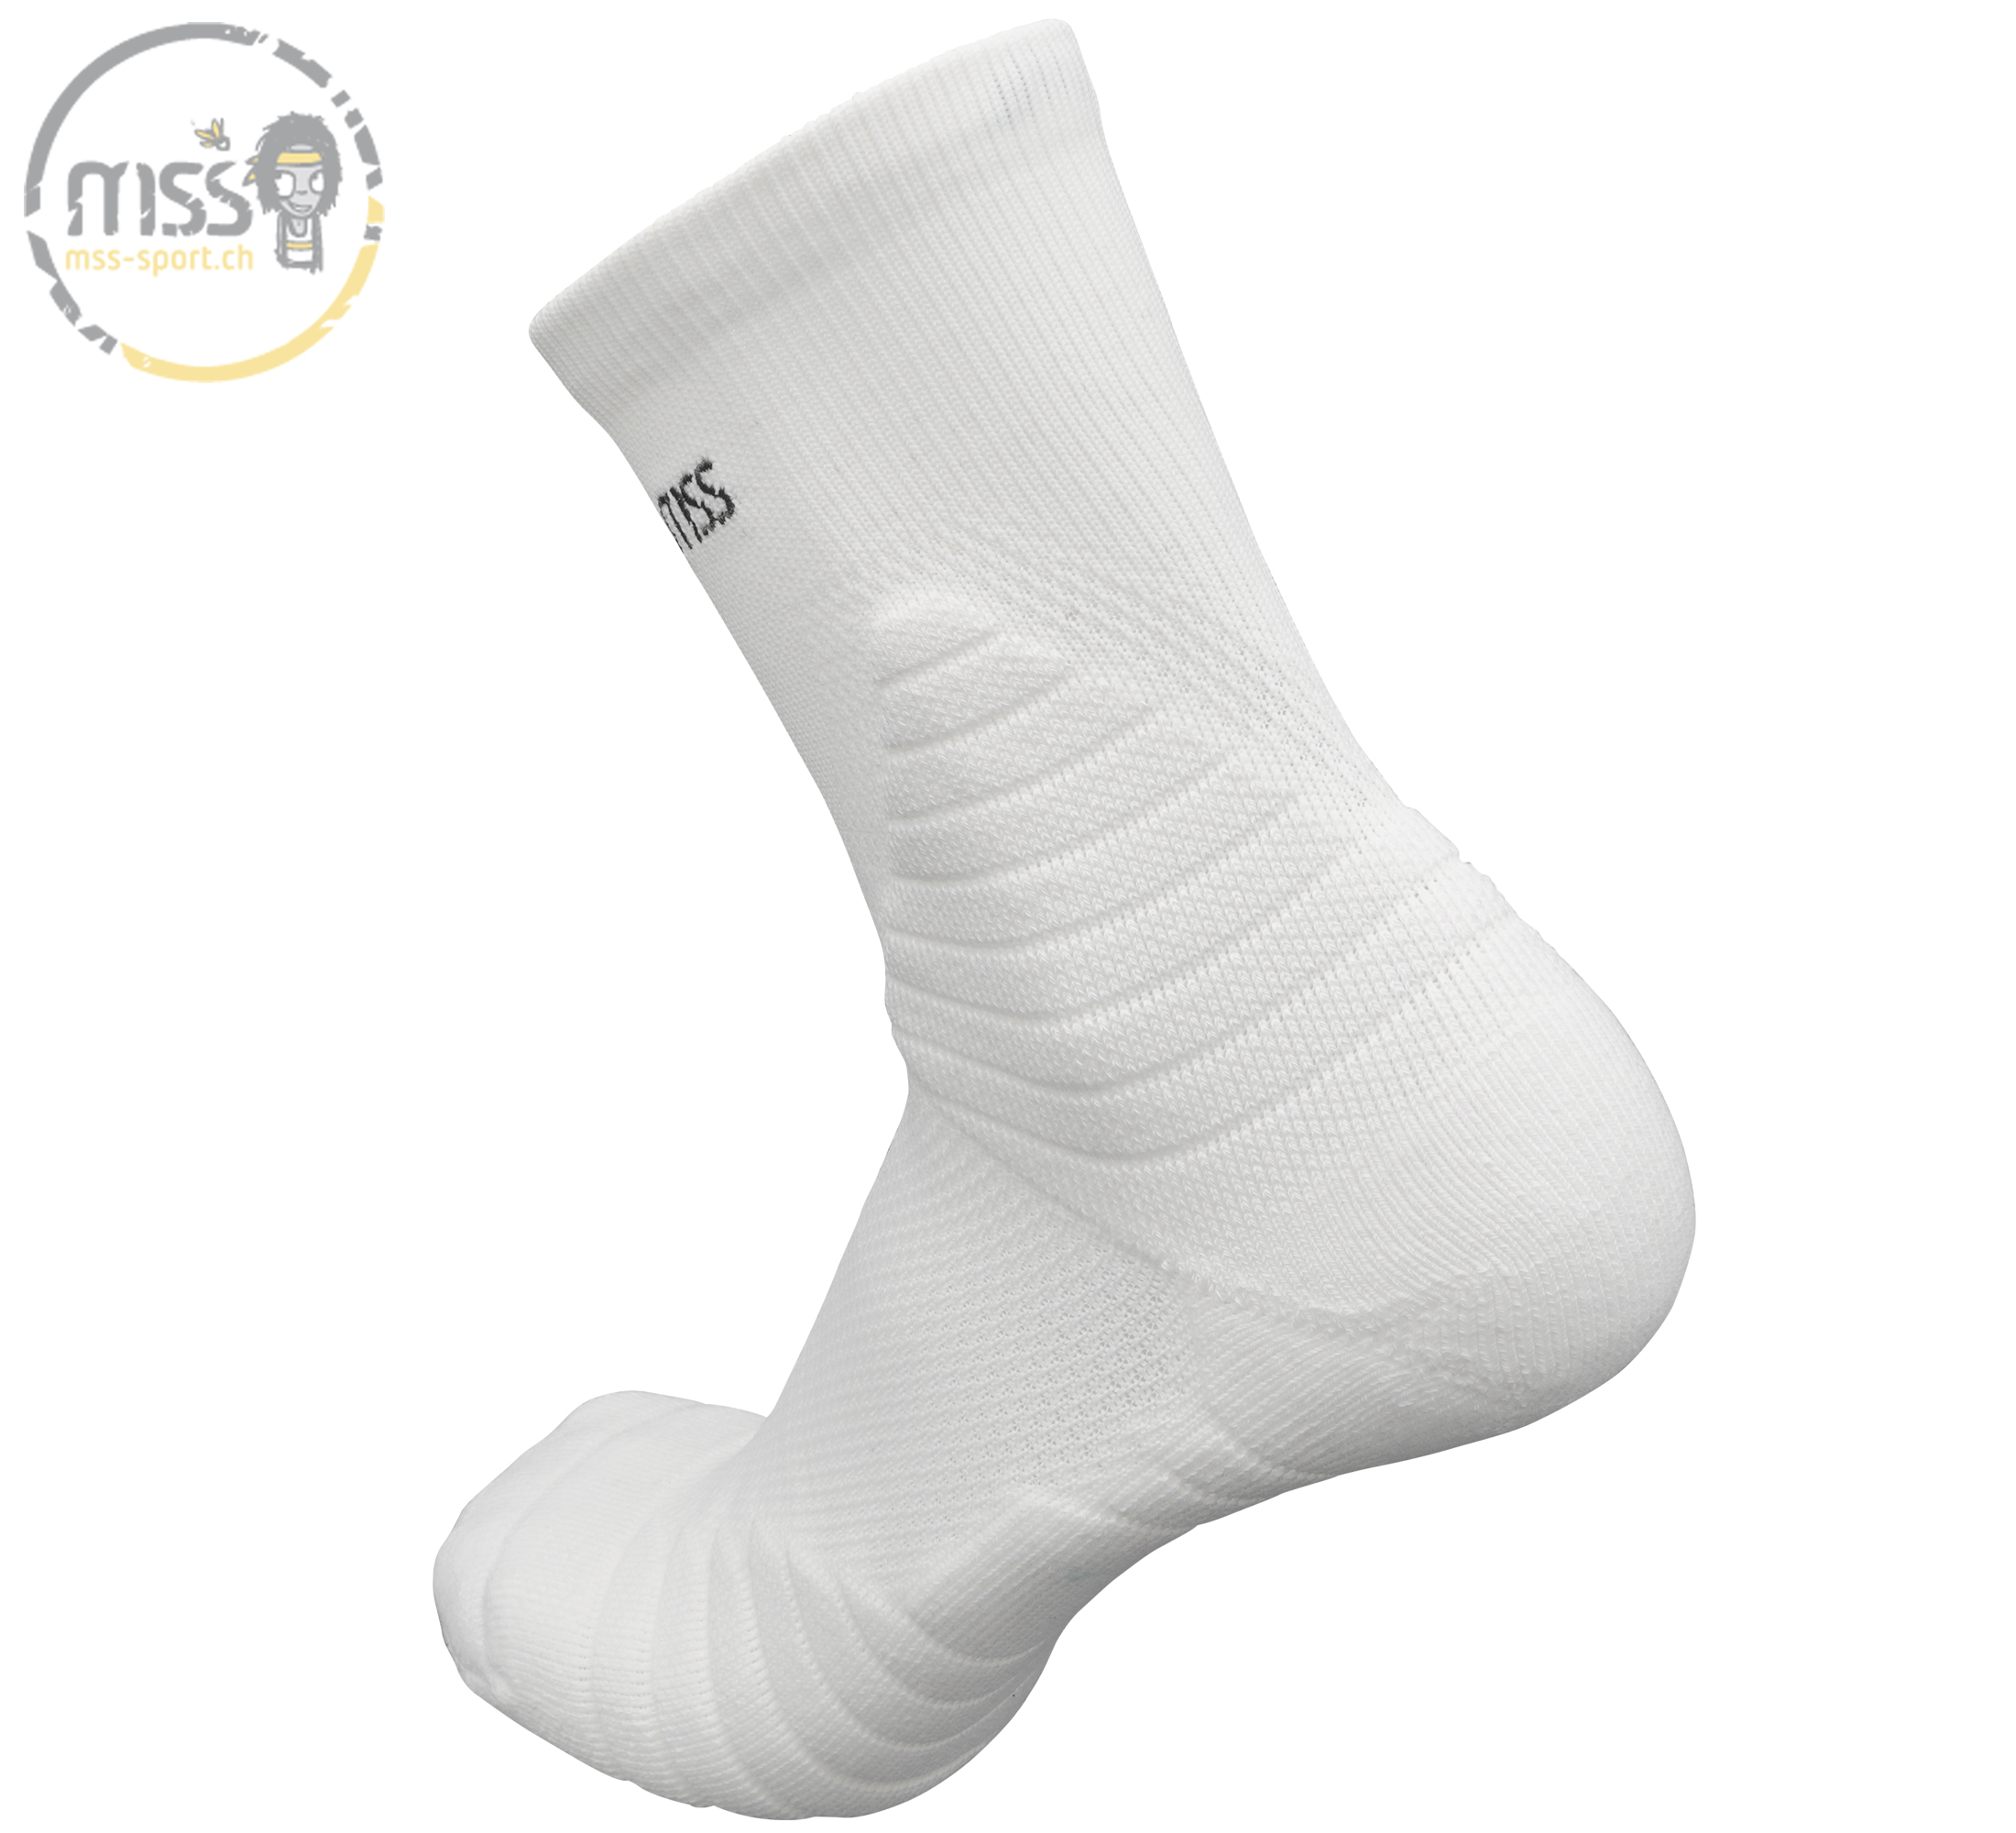 mss-socks Smash 5500 mid white